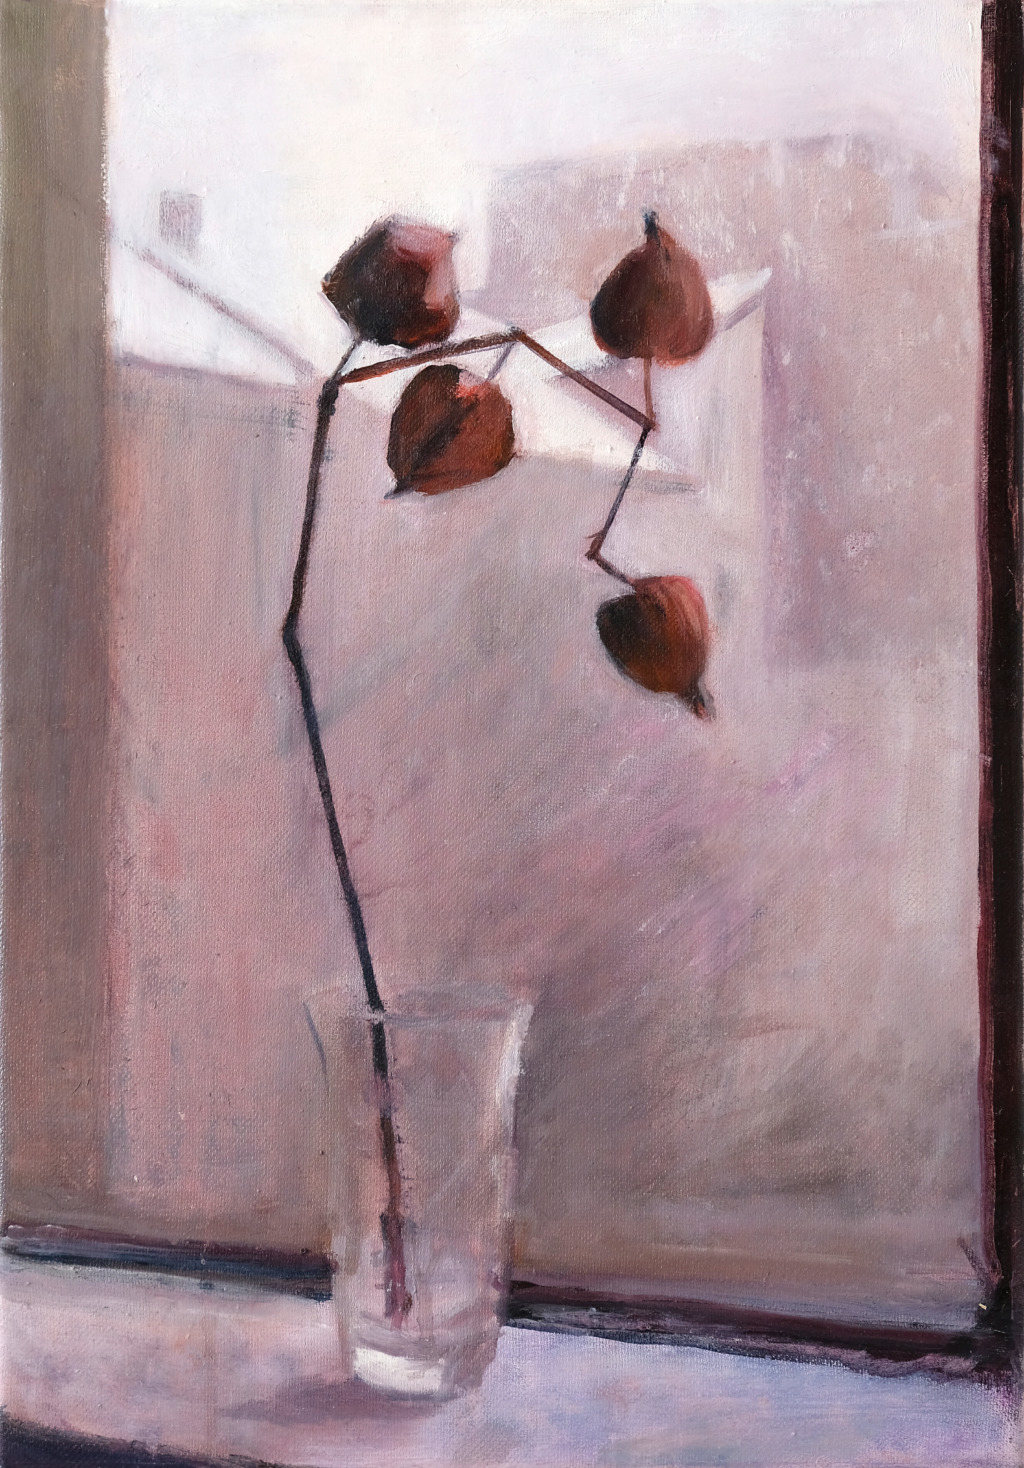 Andrea Muheim, Lampion I, 2021
Oil on canvas
50 x 35 cm